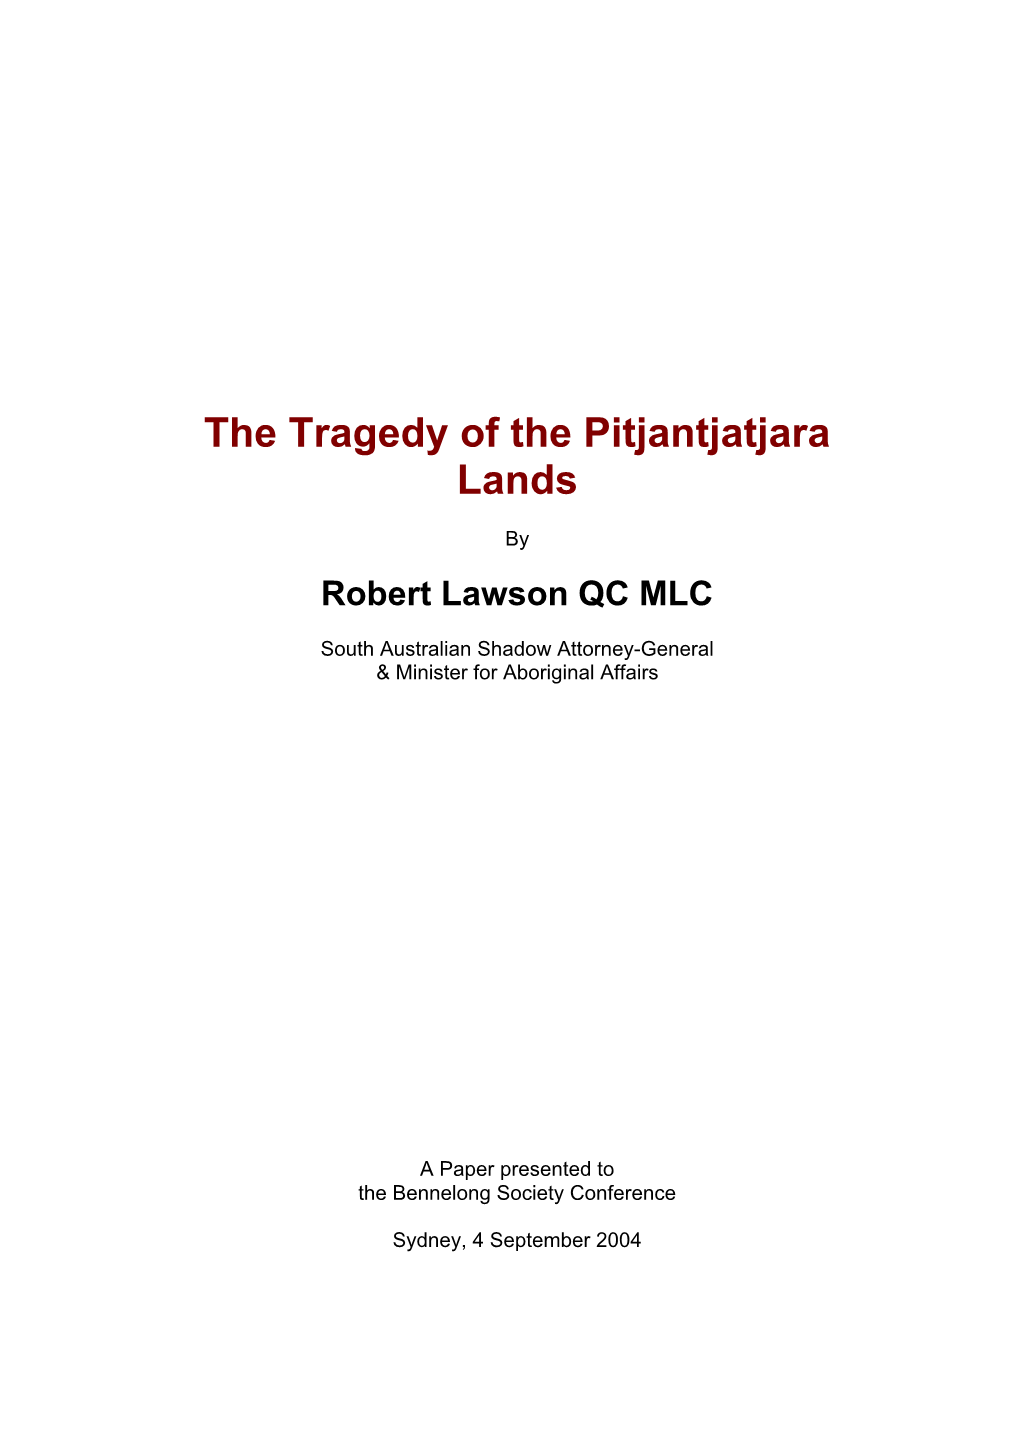 The Tragedy of the Pitjantjatjara Lands